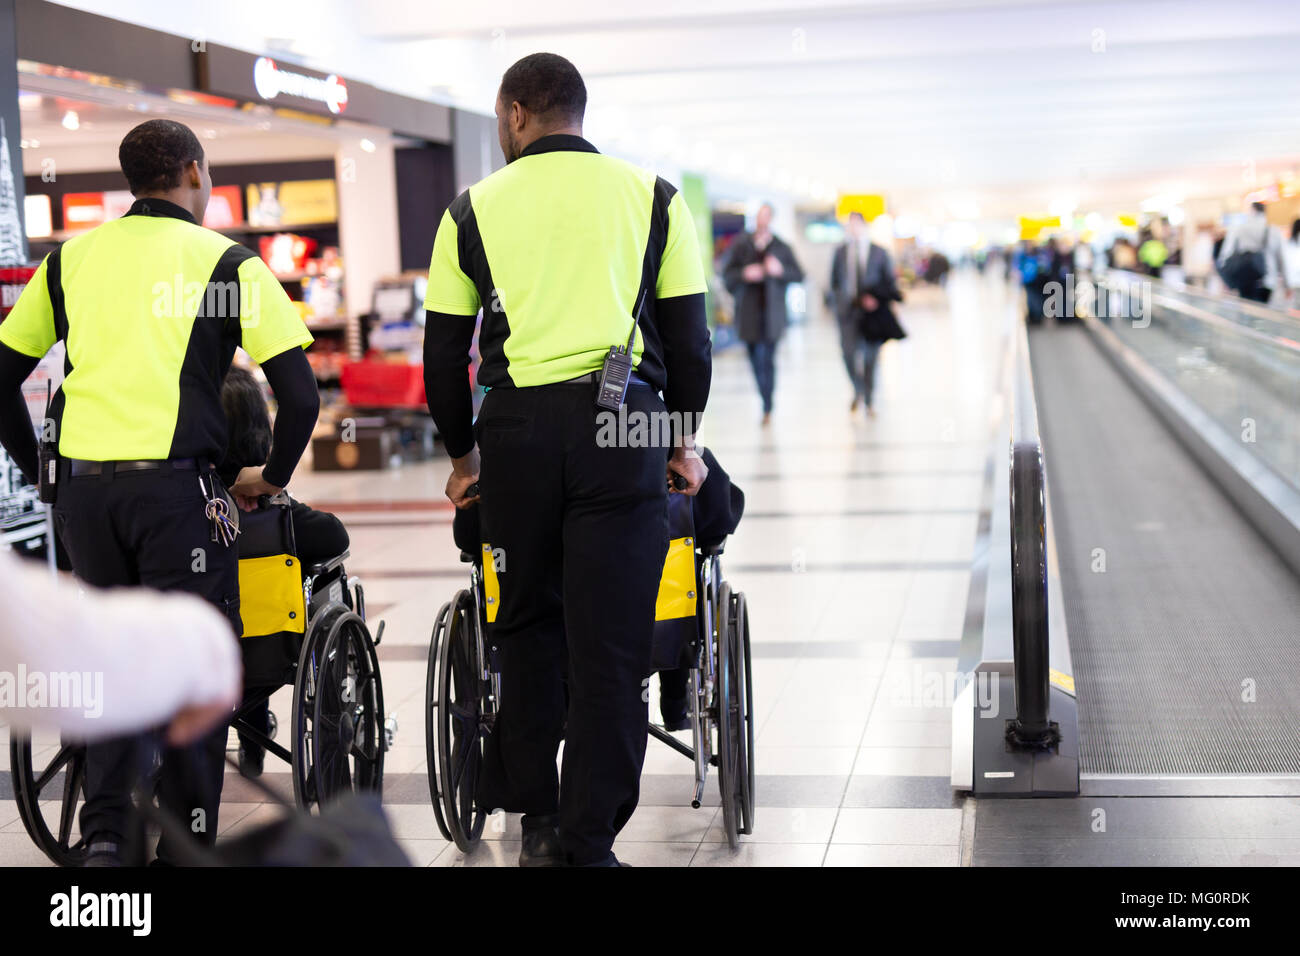 Man caretaker pushing elderly people in wheelchair in the airport Stock Photo